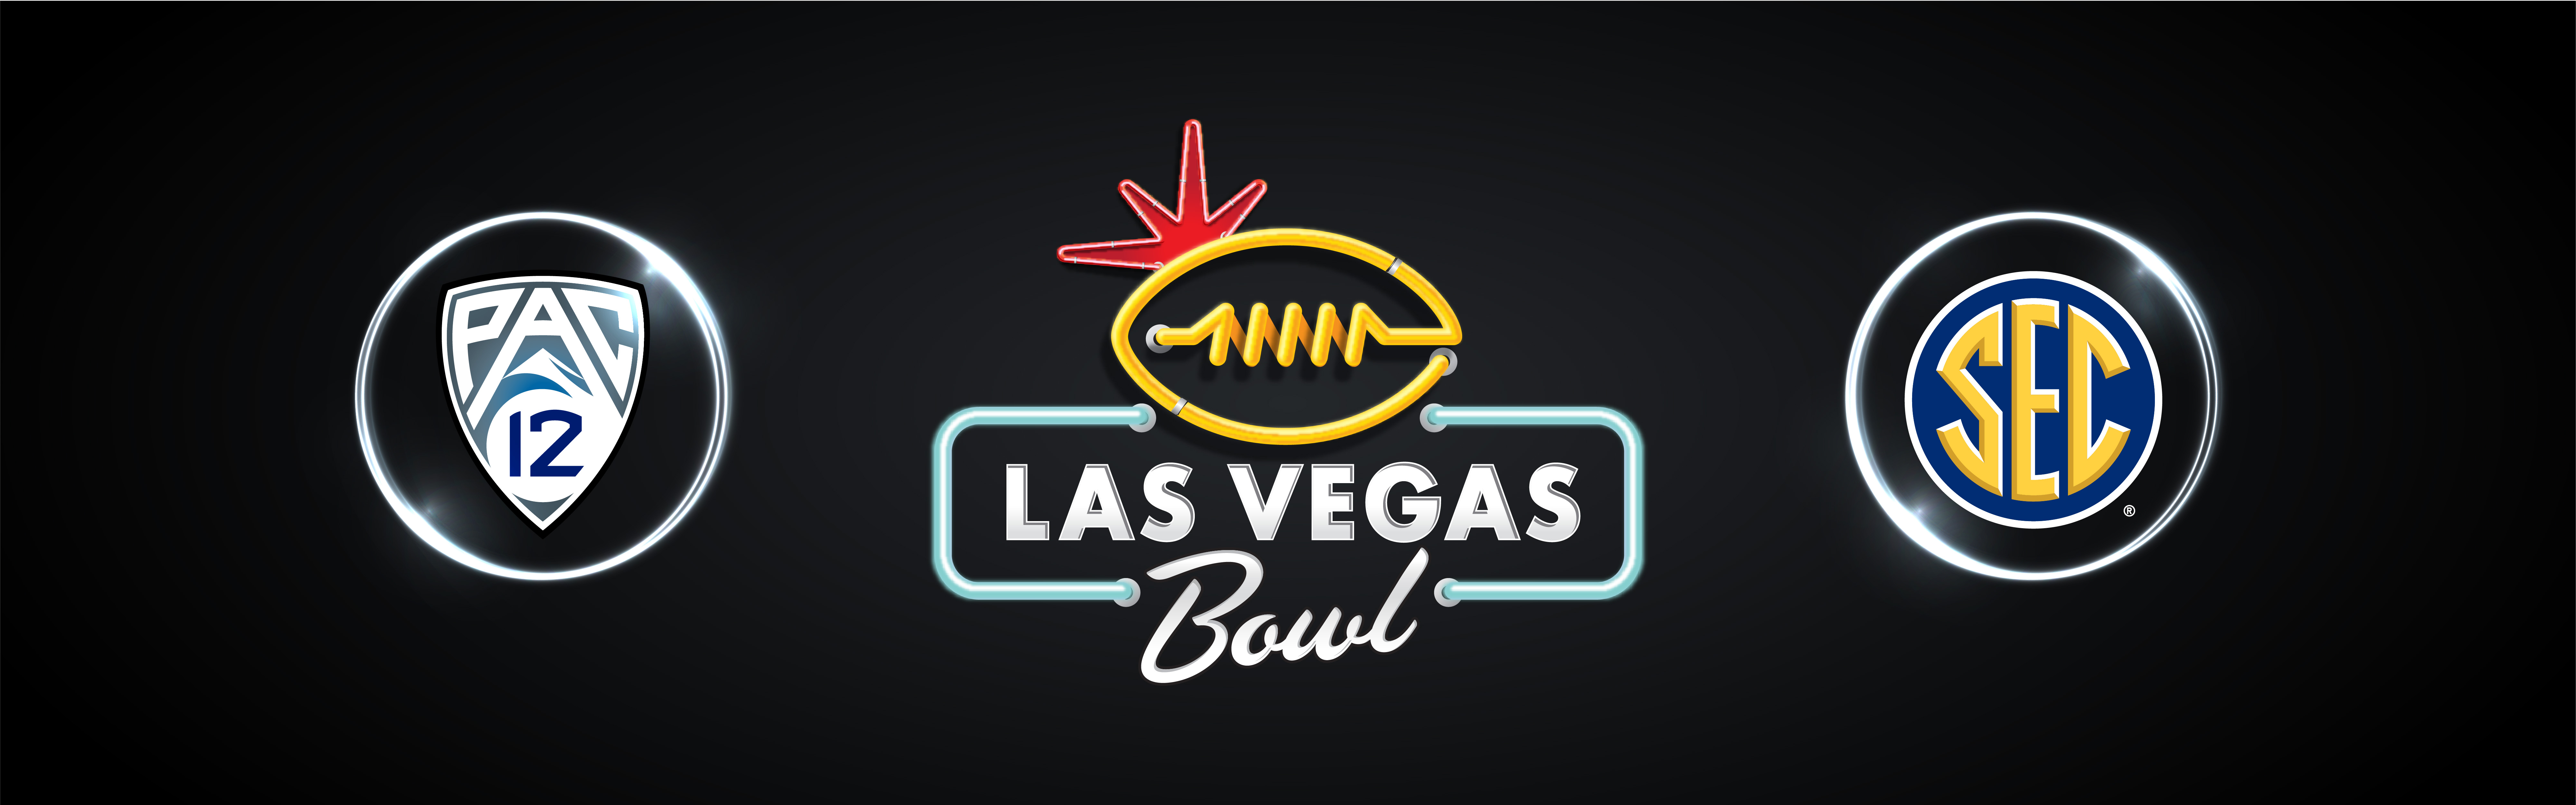 ESPN Events Announces Las Vegas Bowl Cancellation for 2020 Season